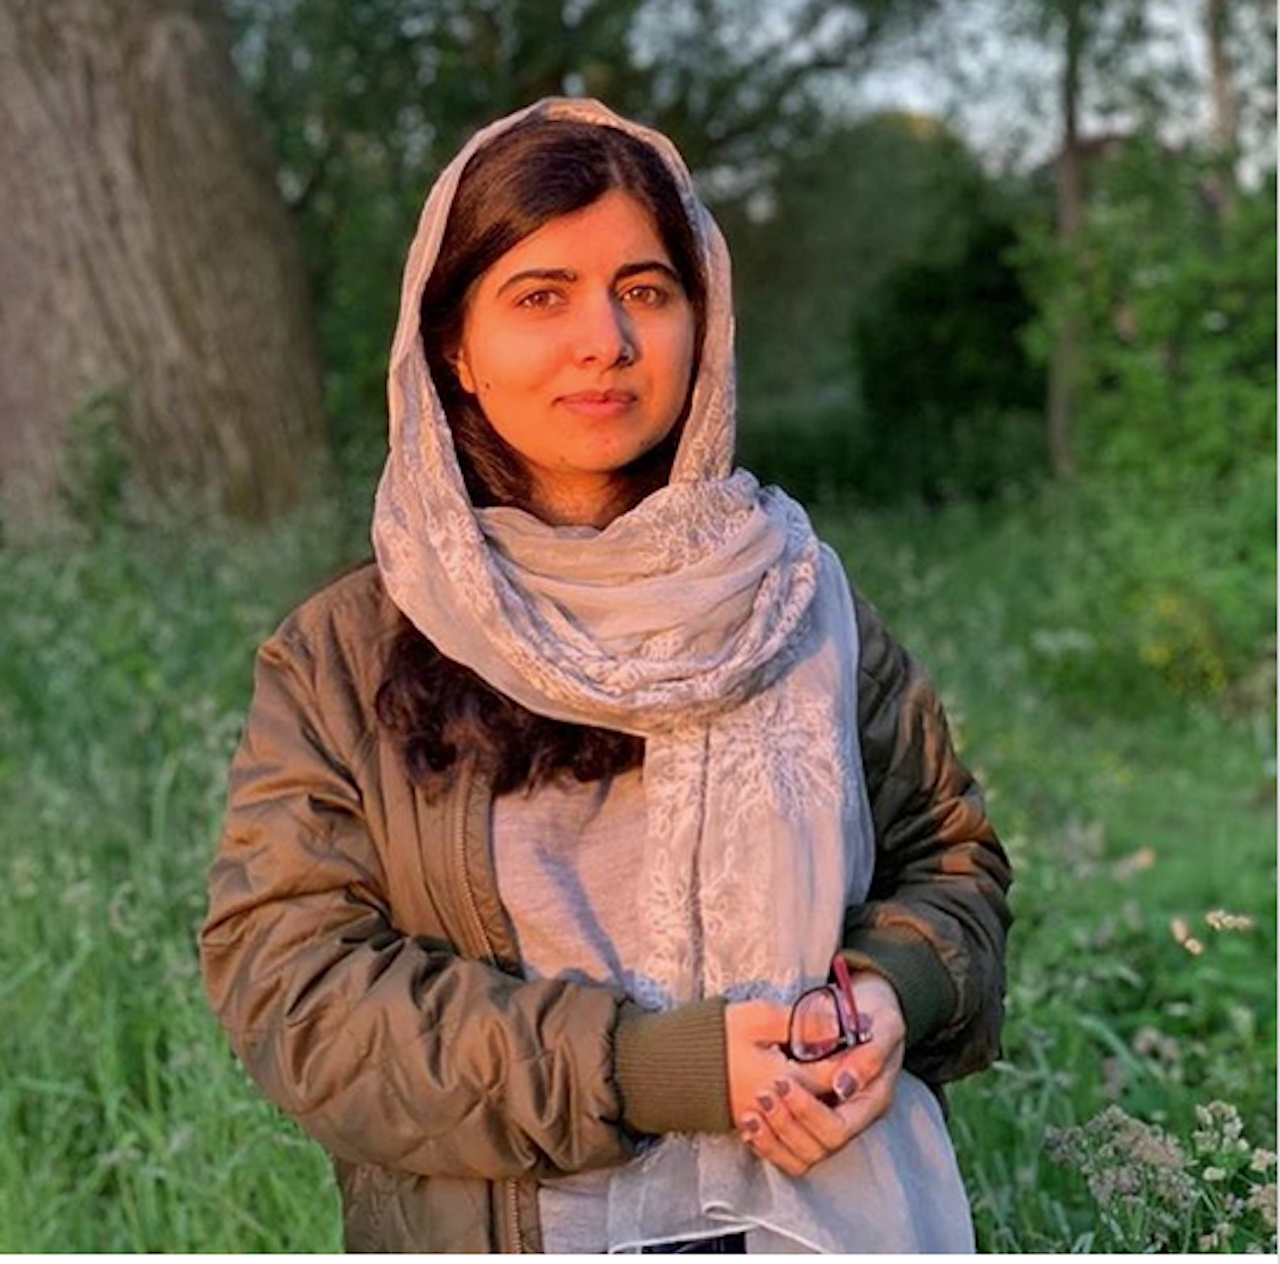 Malala Yousafzai, Education Rights Advocate